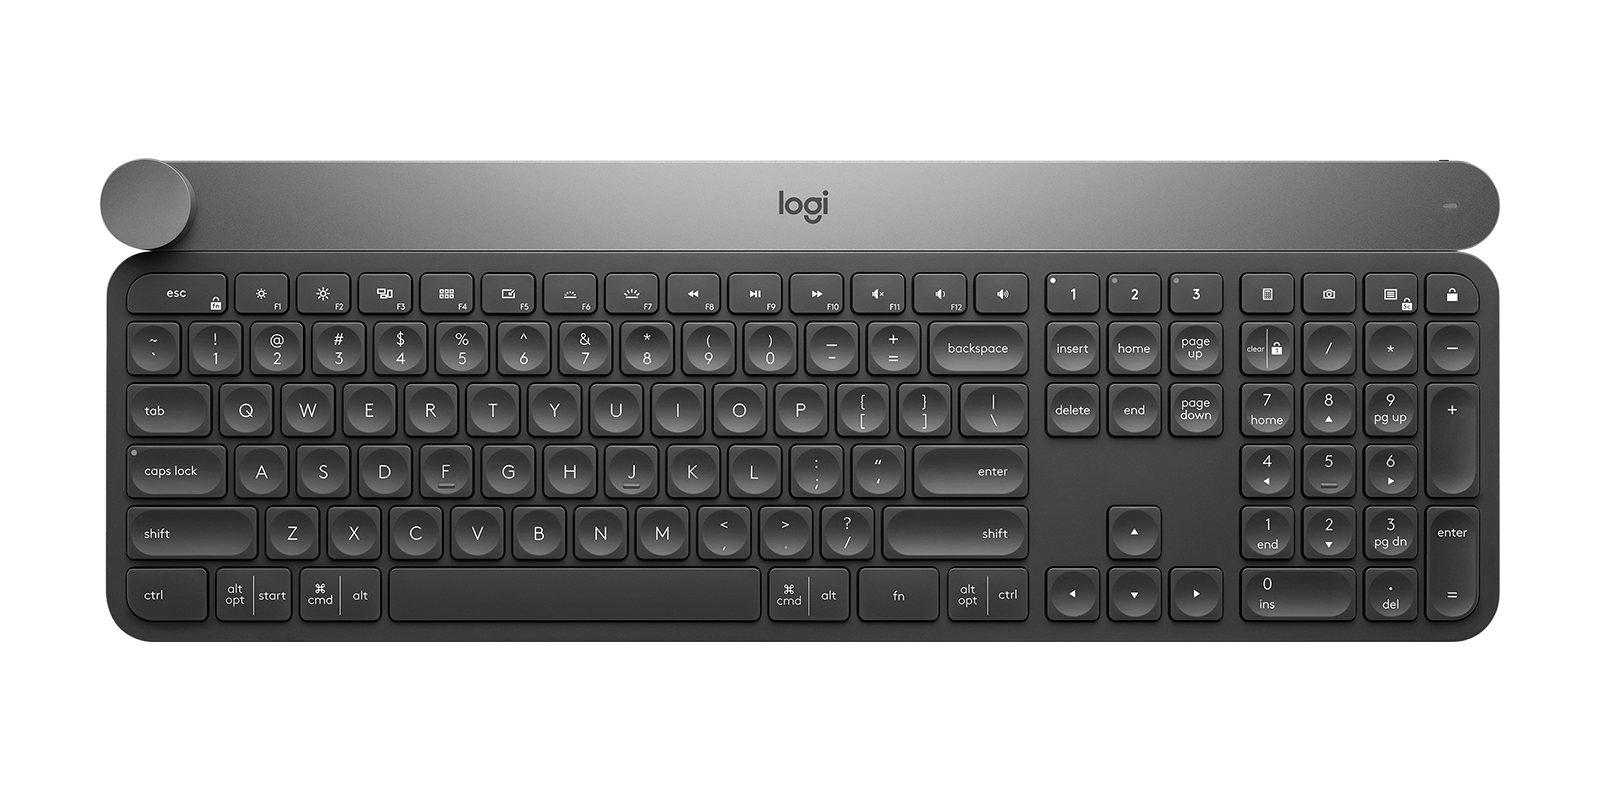 Logitech CRAFT Keyboard US配列